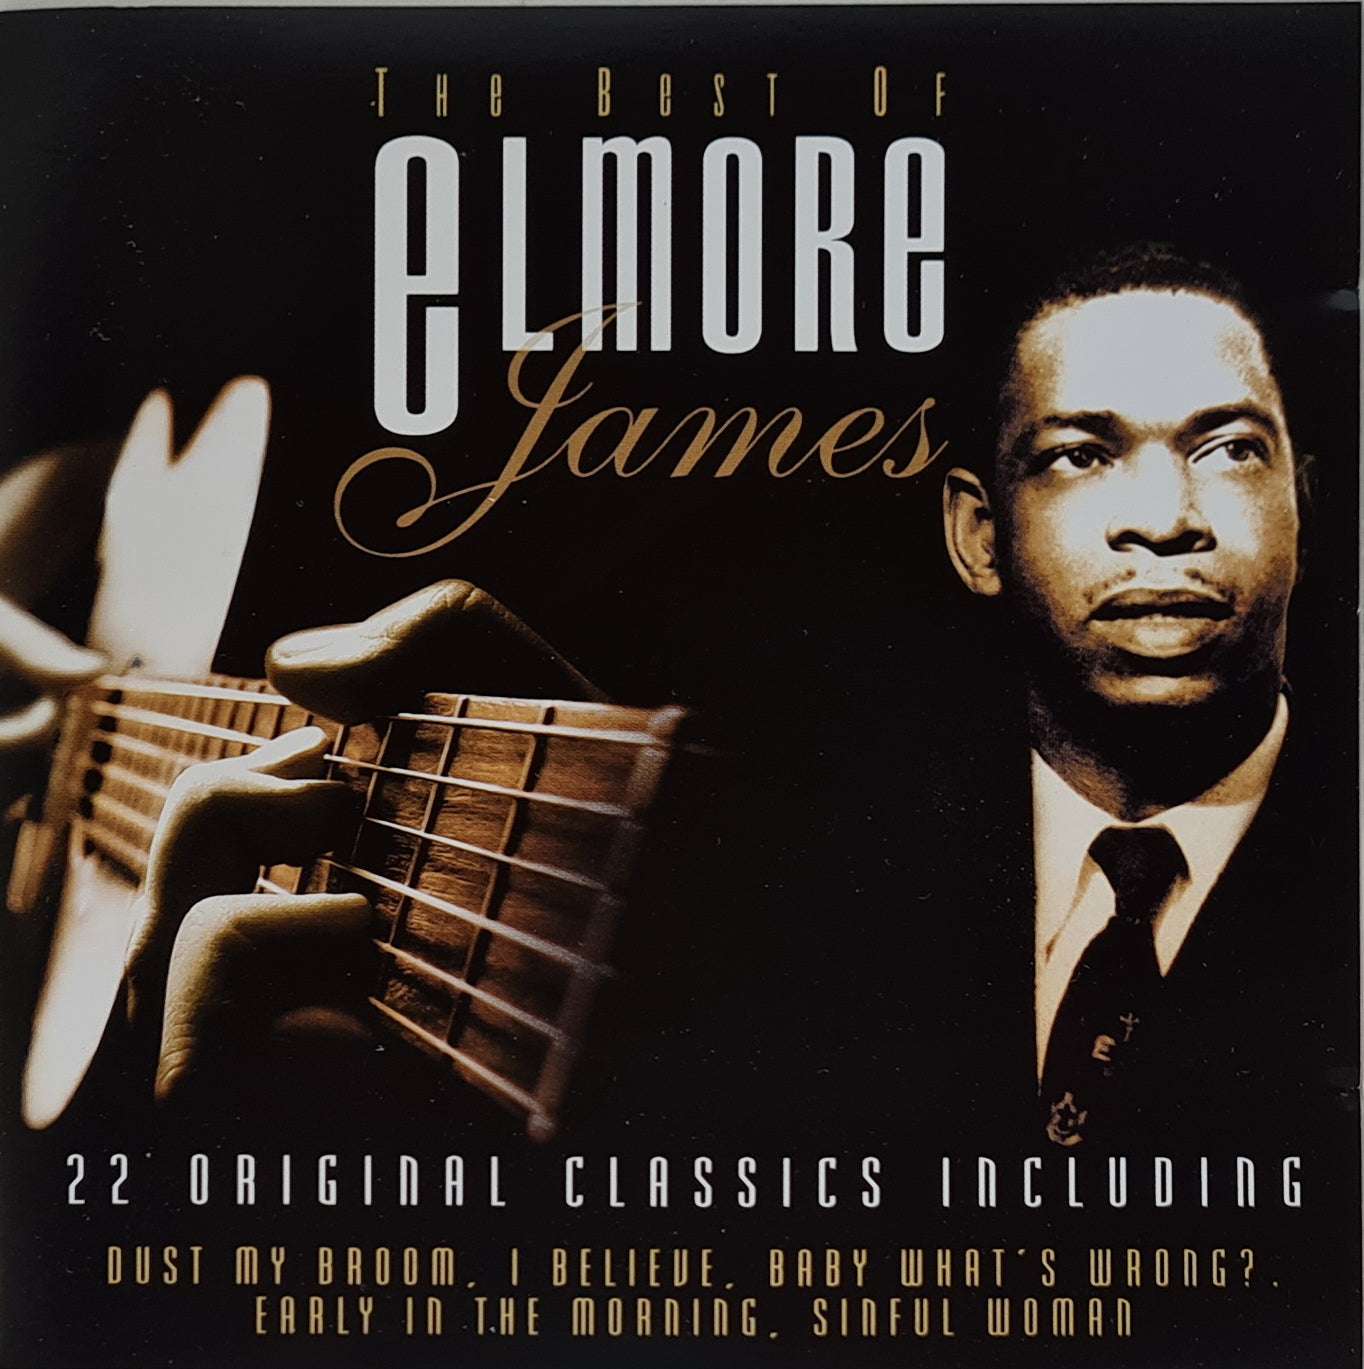 Elmore James - The Best of Elmore James (CD)